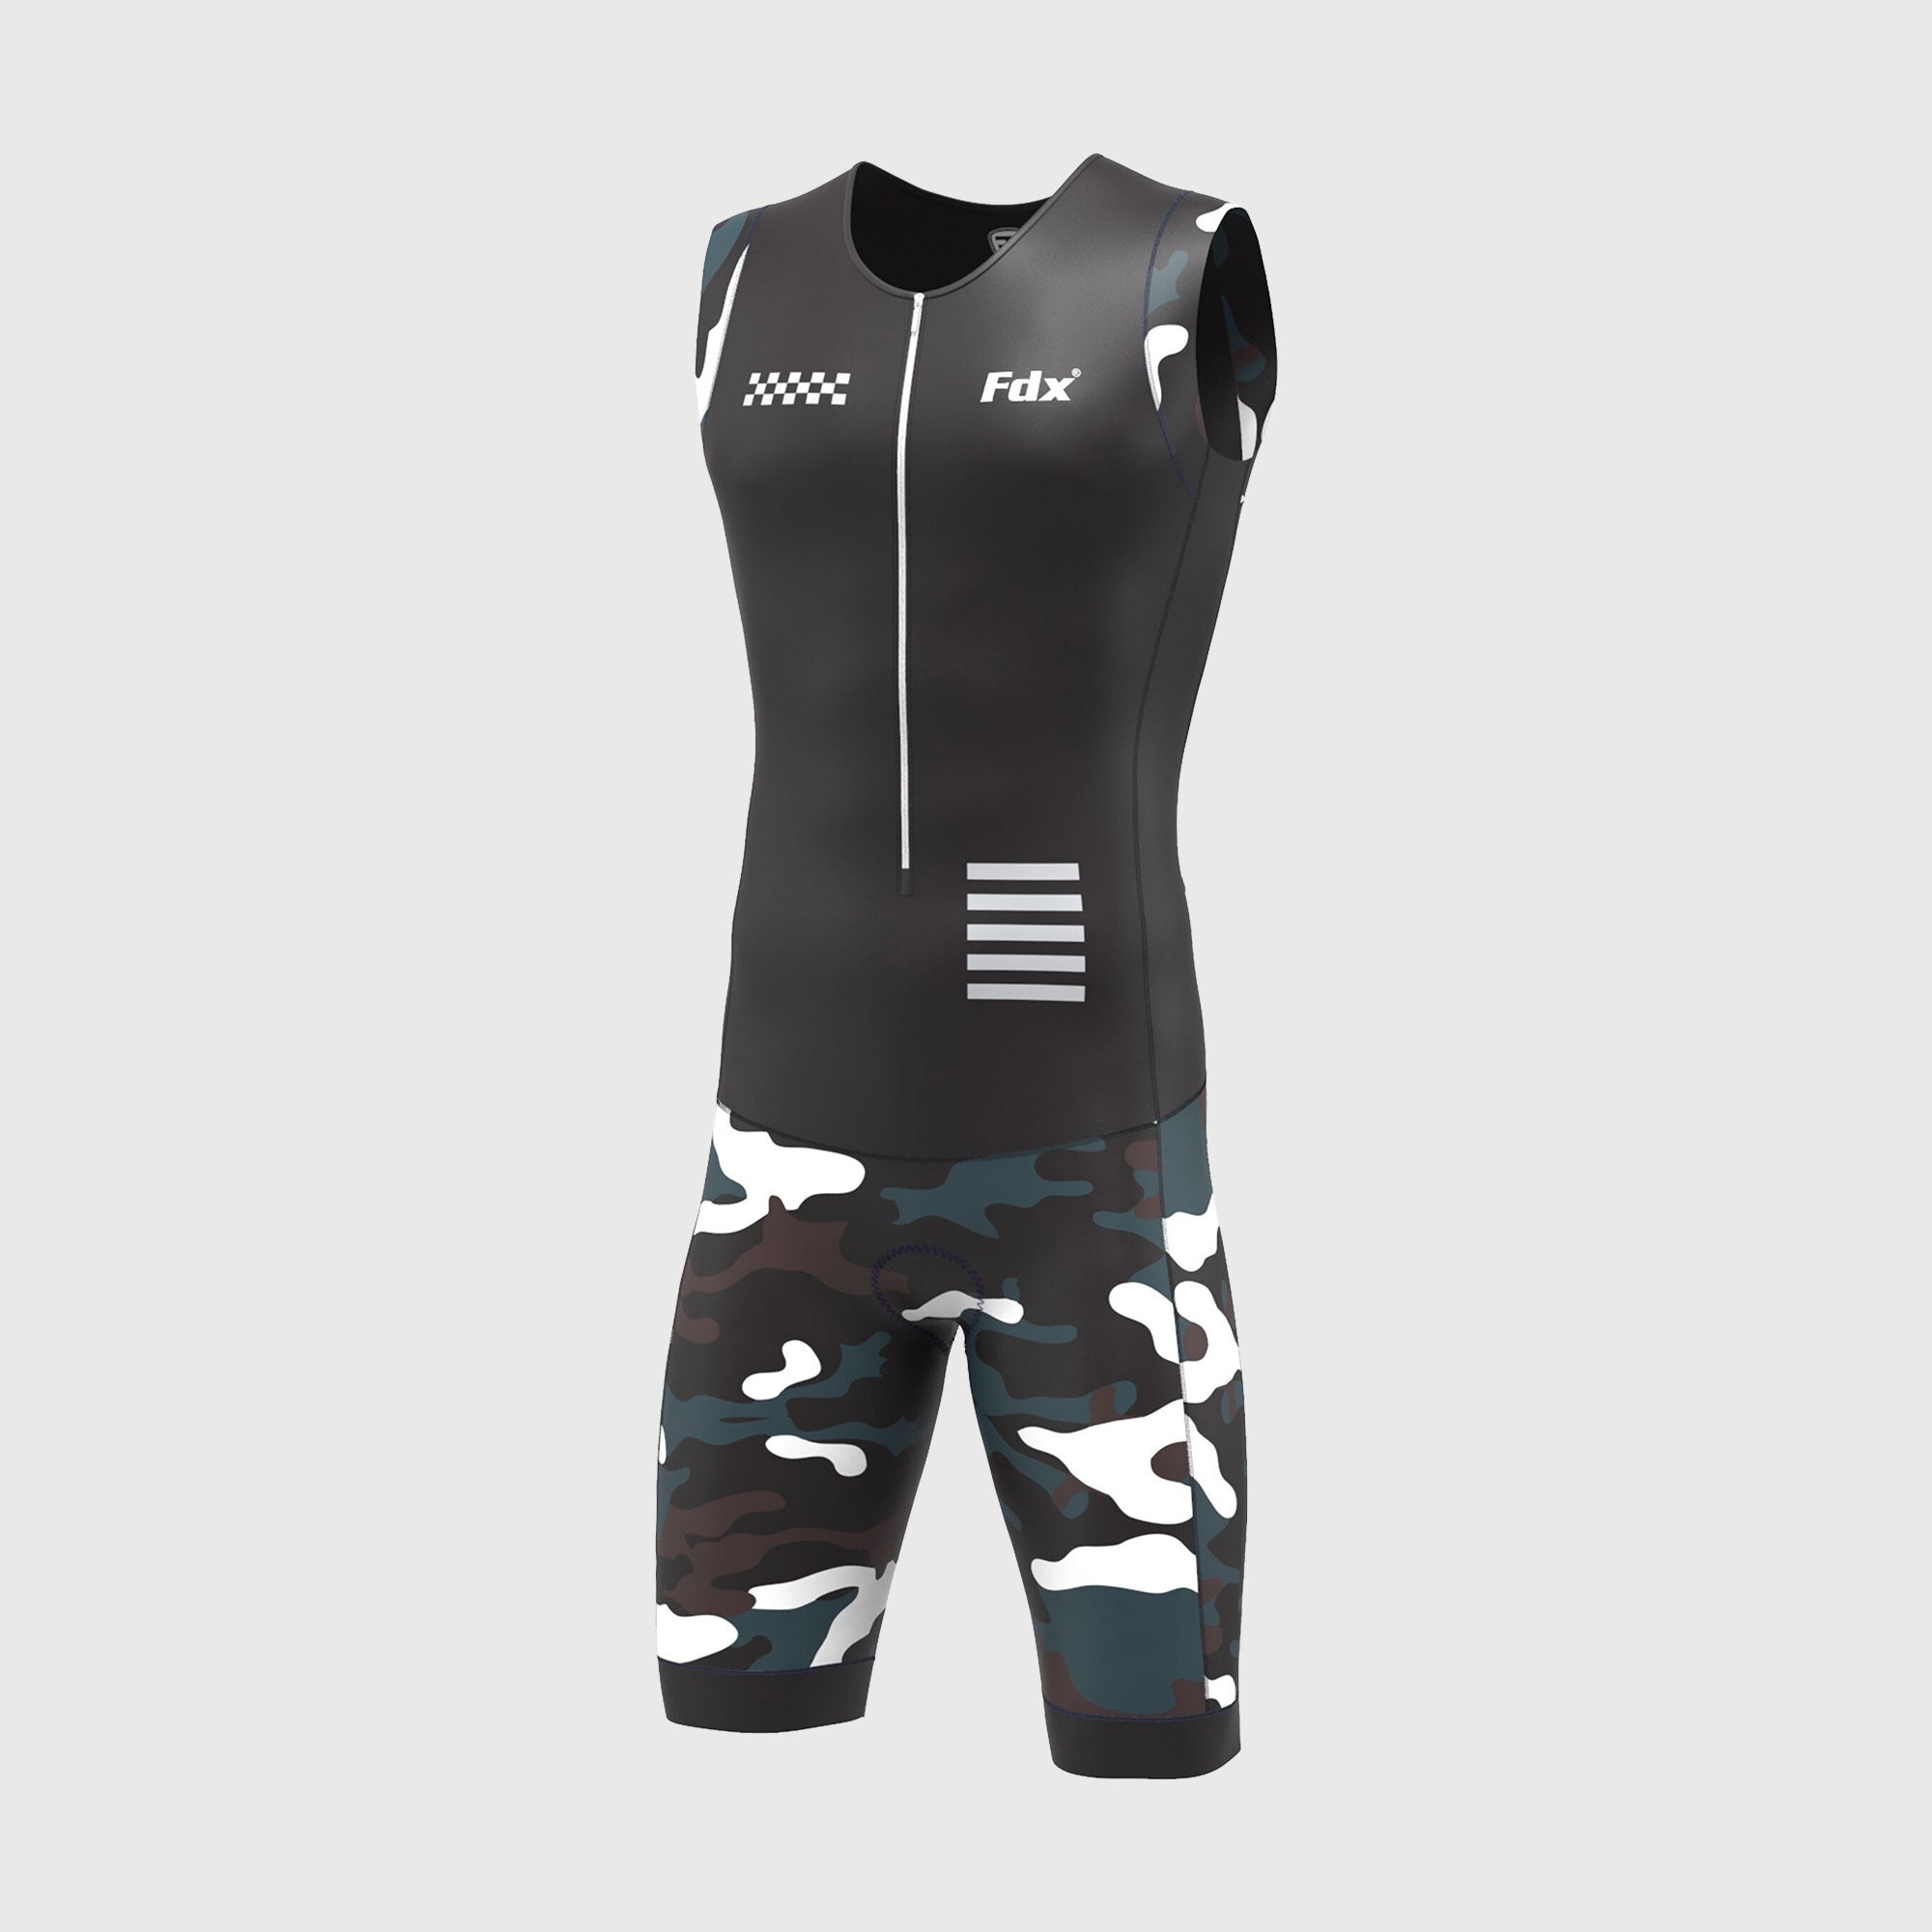 Fdx Camouflage Black Men's Padded Triathlon Suit